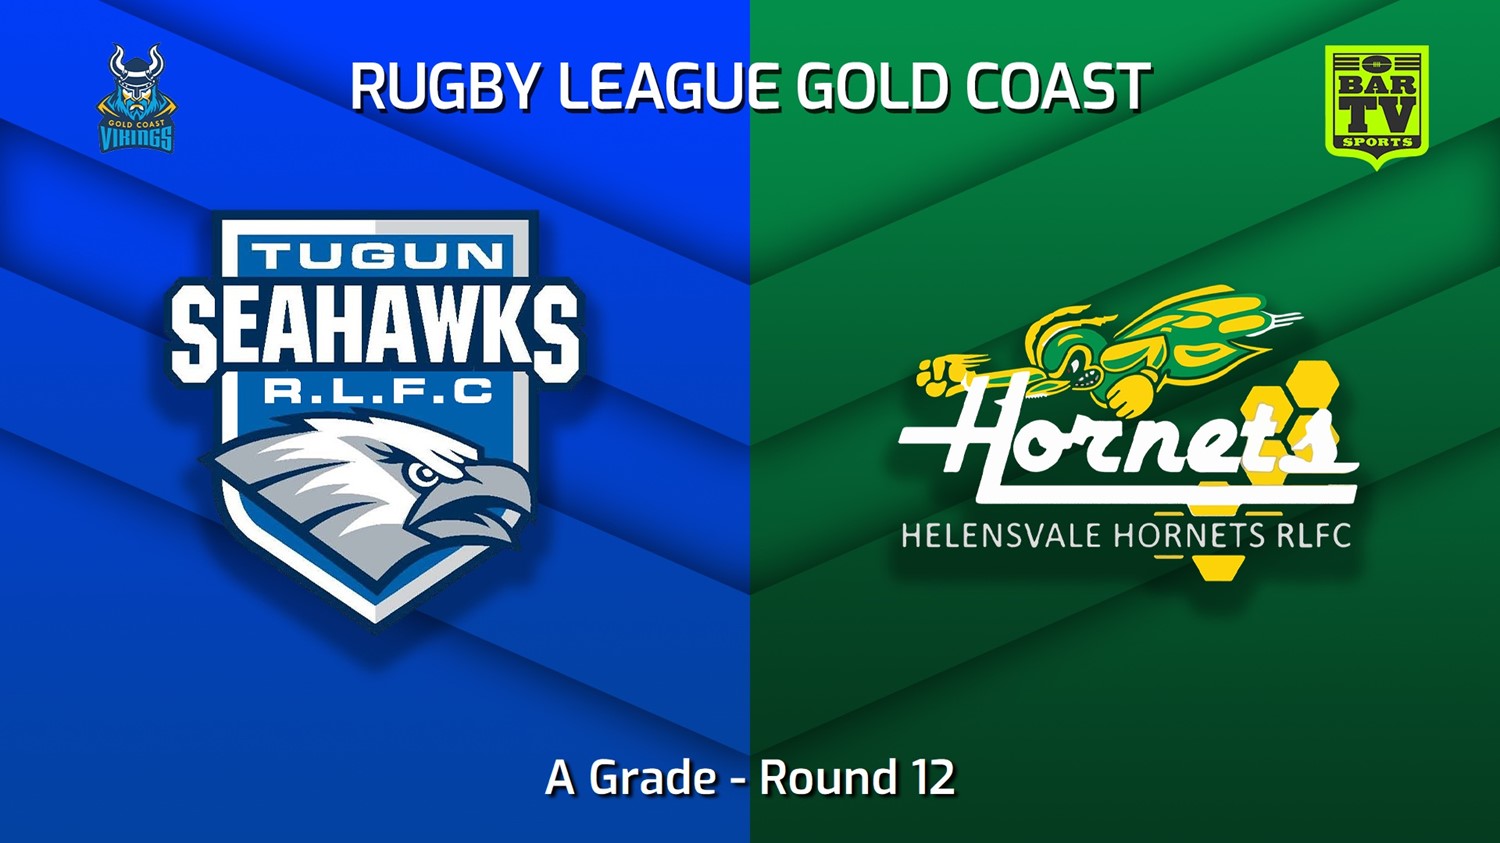 220702-Gold Coast Round 12 - A Grade - Tugun Seahawks v Helensvale Hornets Slate Image